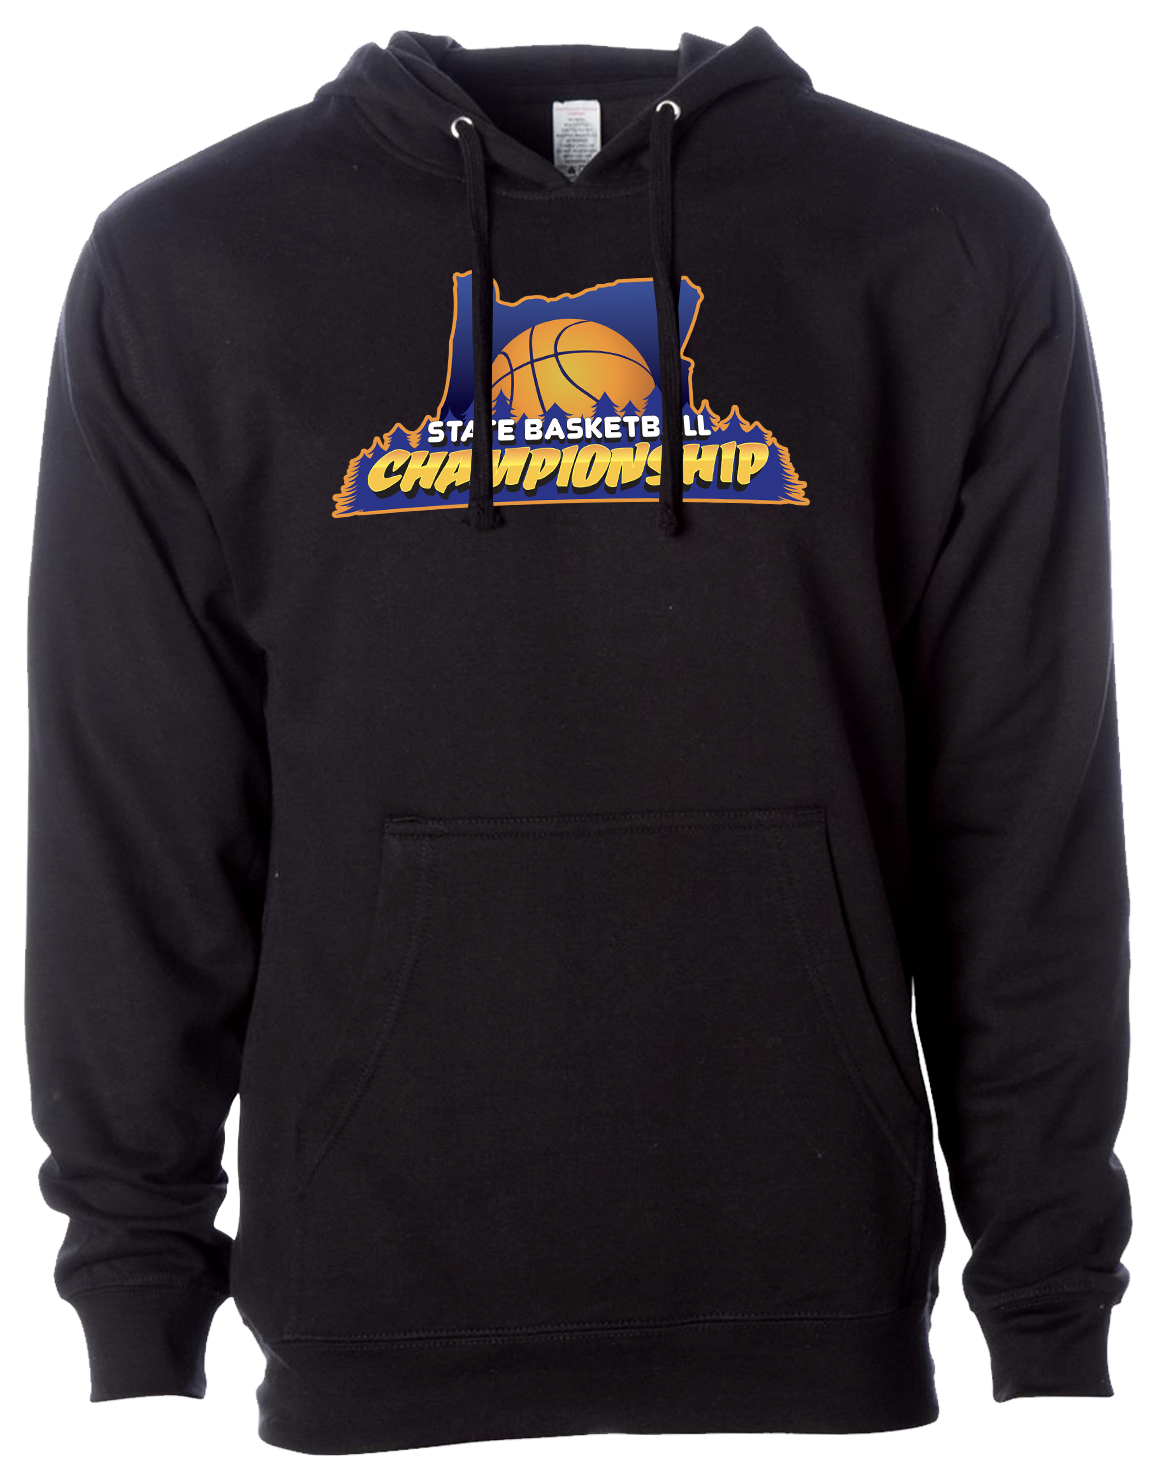 Black Oregon State Basketball Sweatshirt